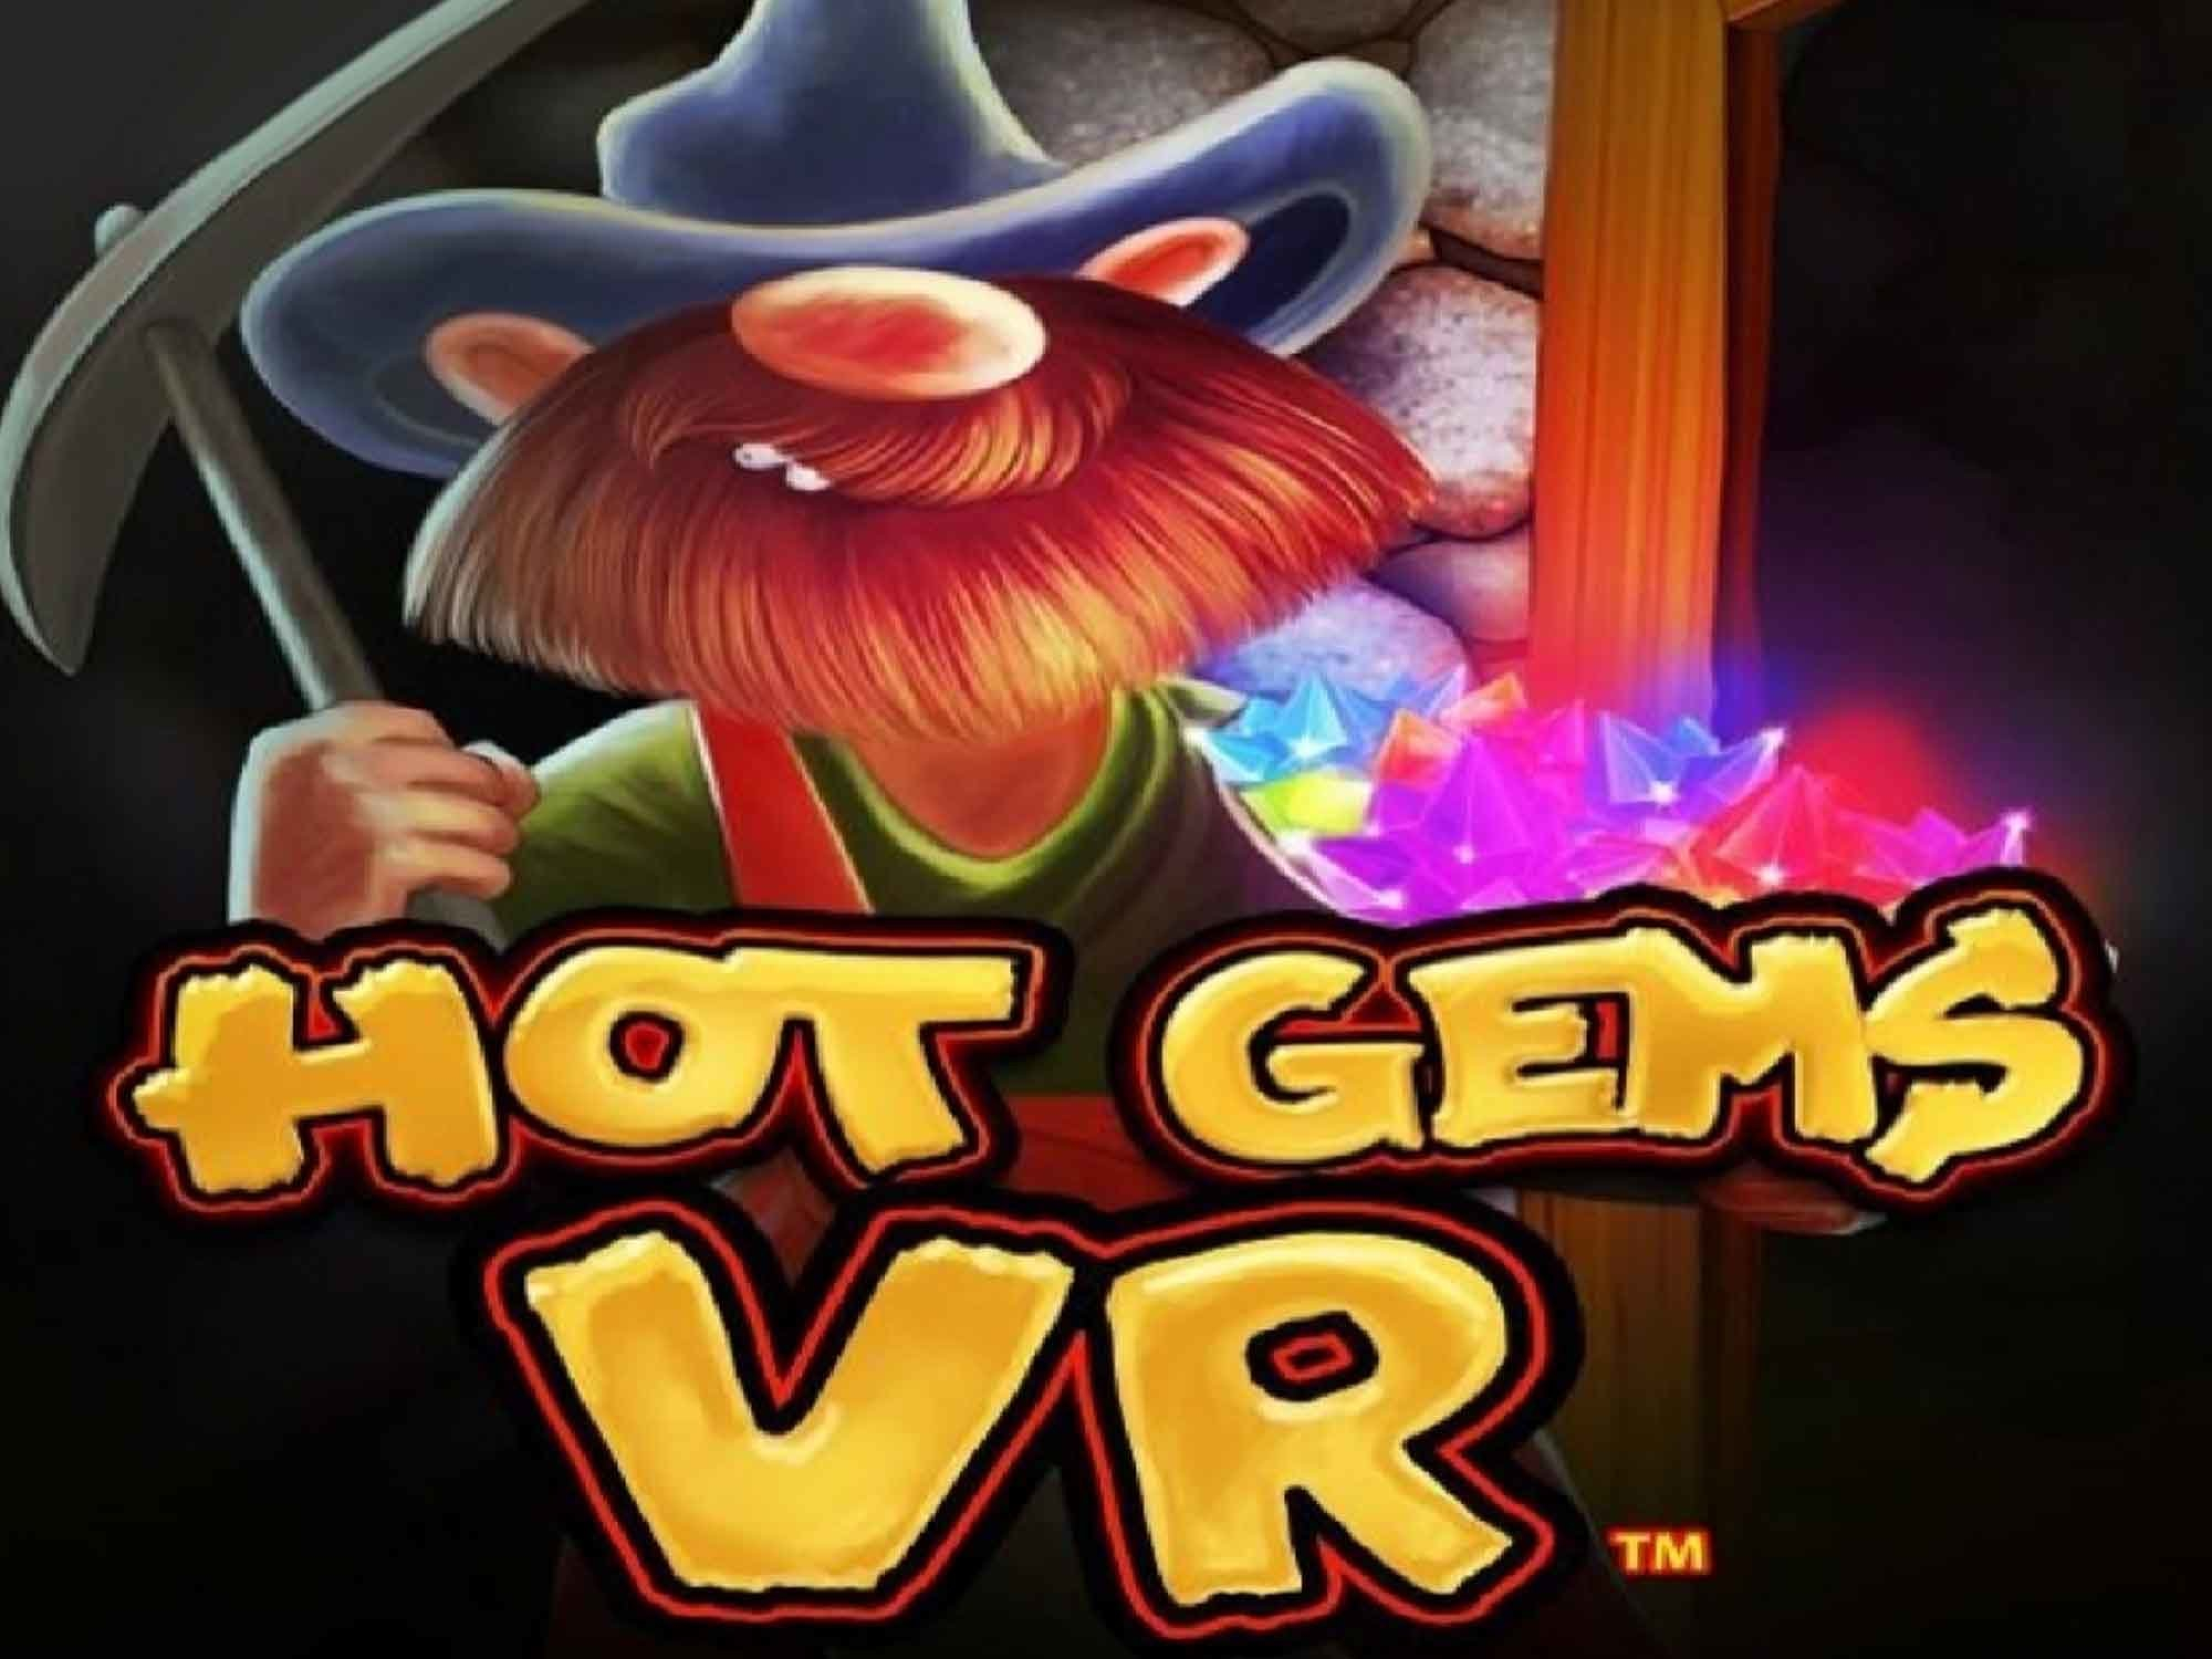 Hot Gems VR